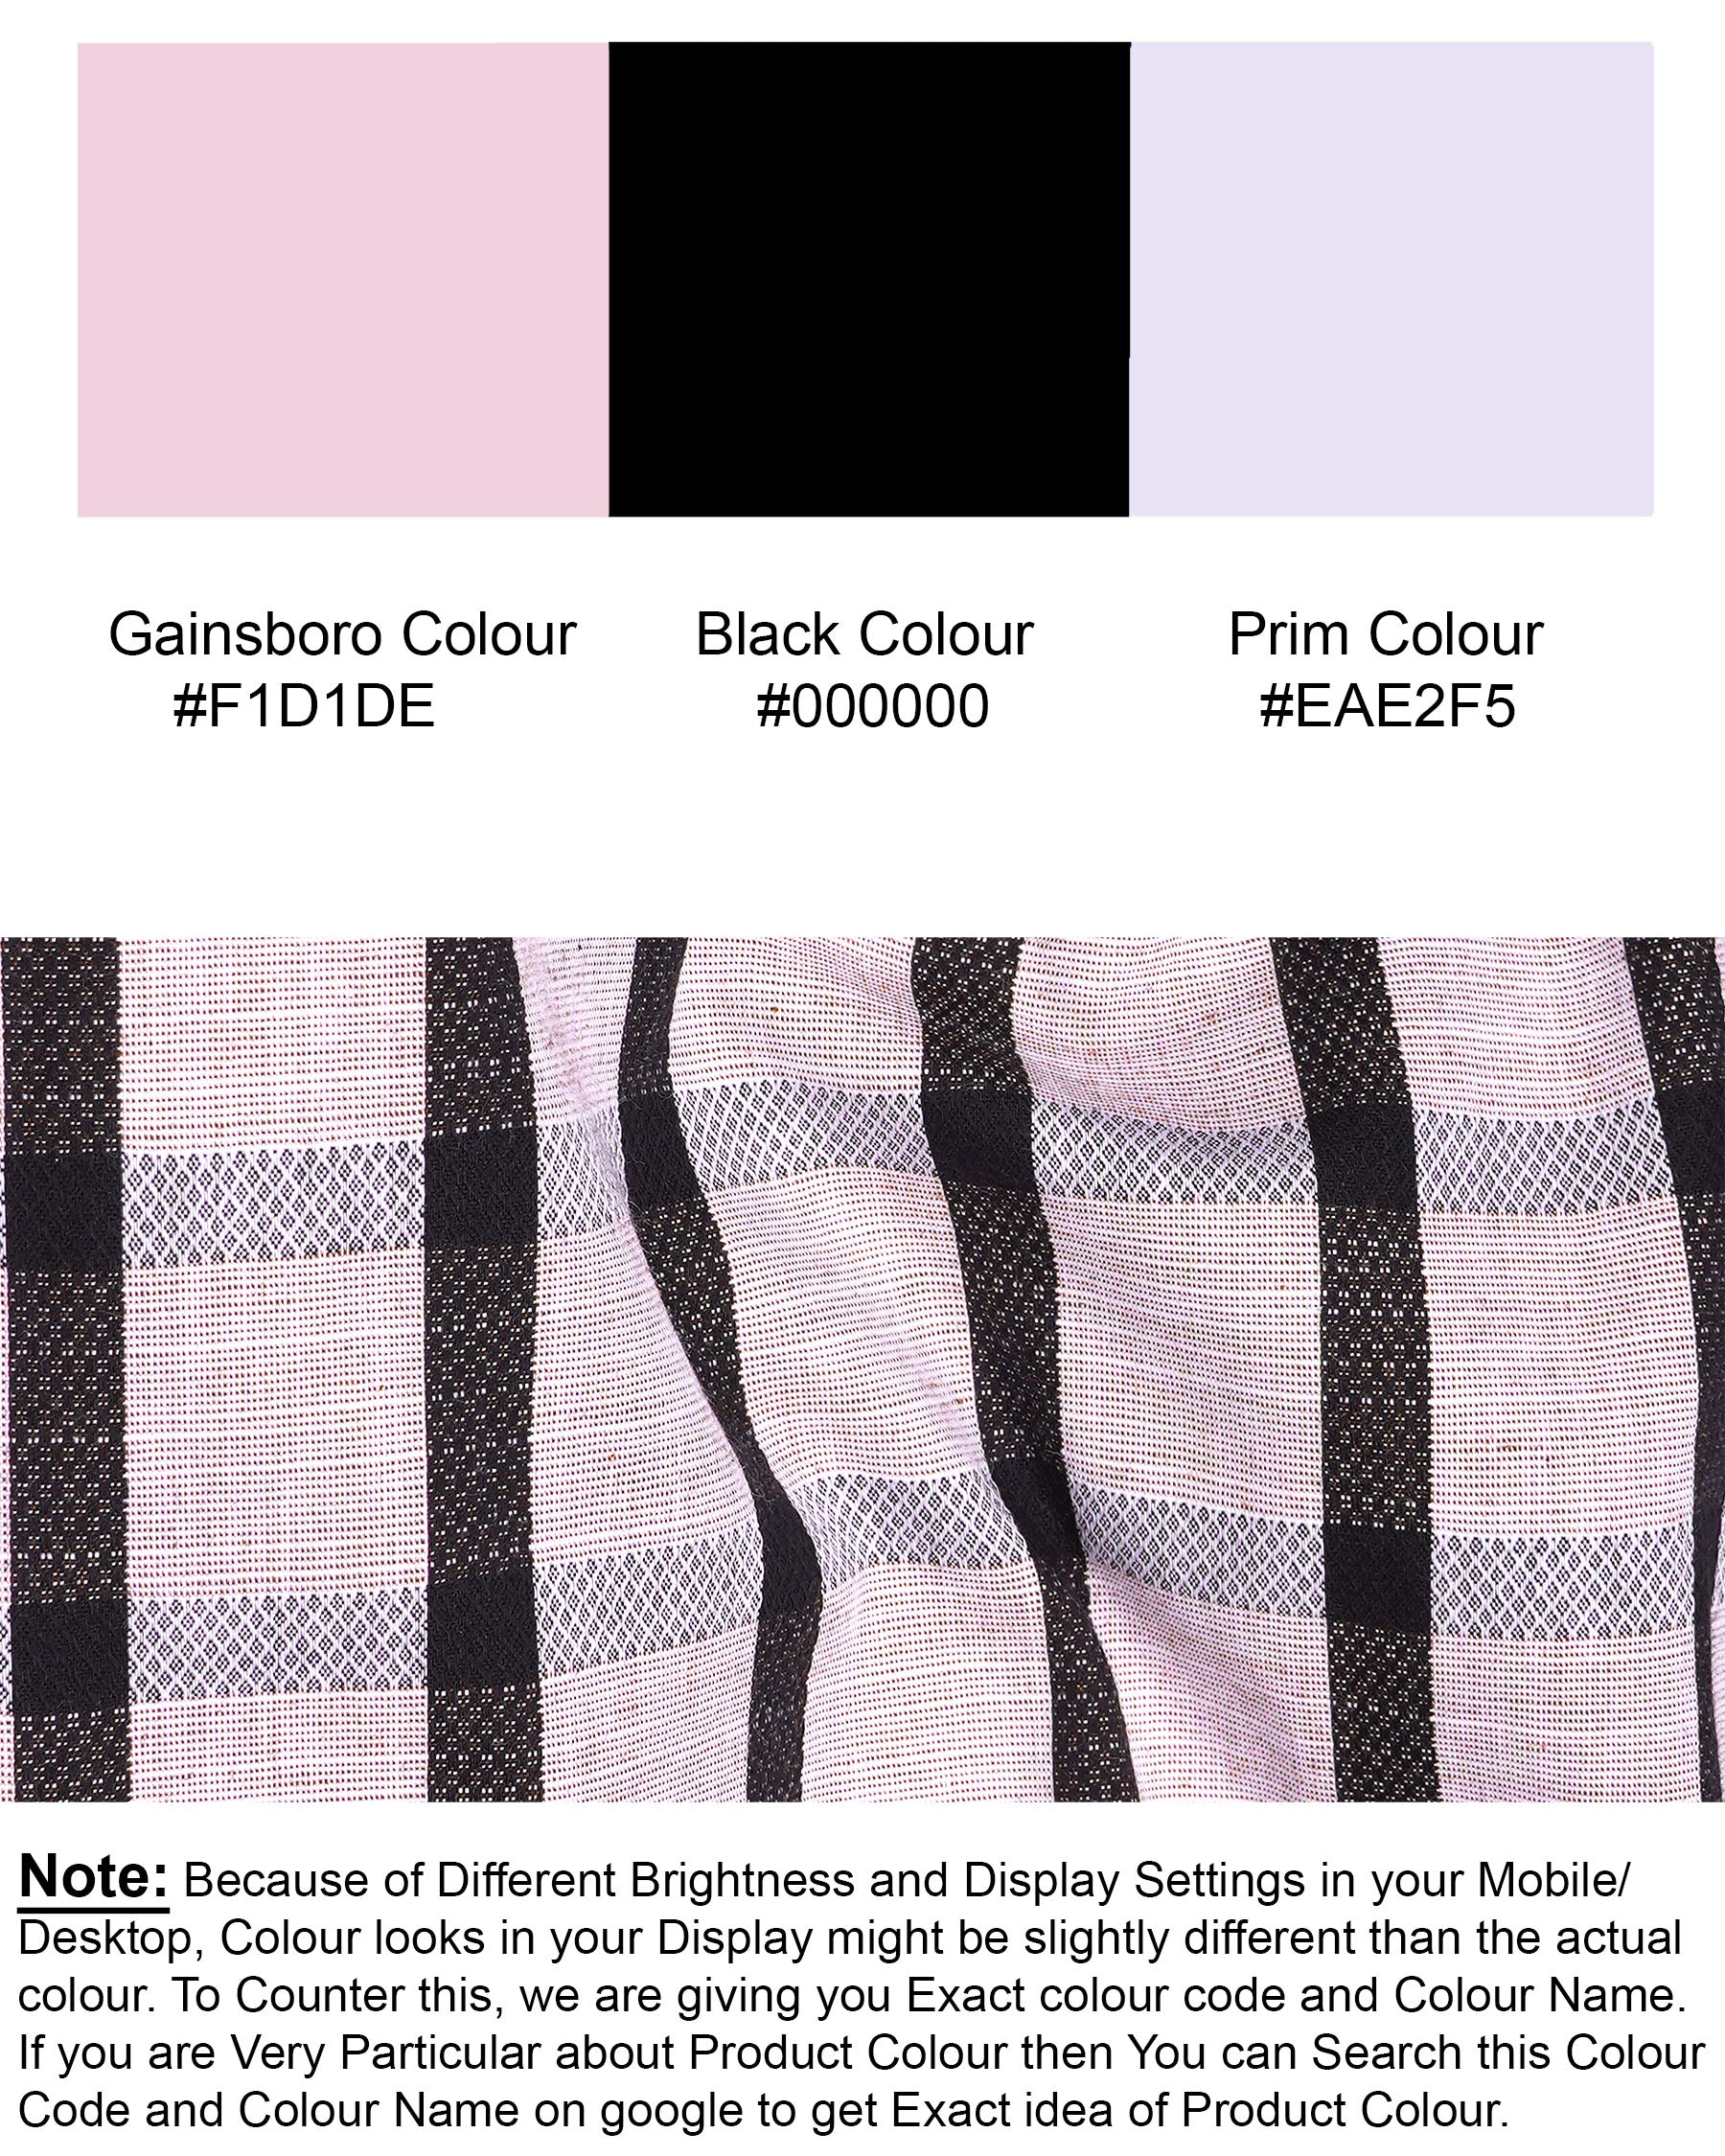 Gainsboro Pink and Jade Black Plaid Dobby Textured Premium Giza Cotton Shirt 7627-BD-BLK-38, 7627-BD-BLK-H-38, 7627-BD-BLK-39,7627-BD-BLK-H-39, 7627-BD-BLK-40, 7627-BD-BLK-H-40, 7627-BD-BLK-42, 7627-BD-BLK-H-42, 7627-BD-BLK-44, 7627-BD-BLK-H-44, 7627-BD-BLK-46, 7627-BD-BLK-H-46, 7627-BD-BLK-48, 7627-BD-BLK-H-48, 7627-BD-BLK-50, 7627-BD-BLK-H-50, 7627-BD-BLK-52, 7627-BD-BLK-H-52